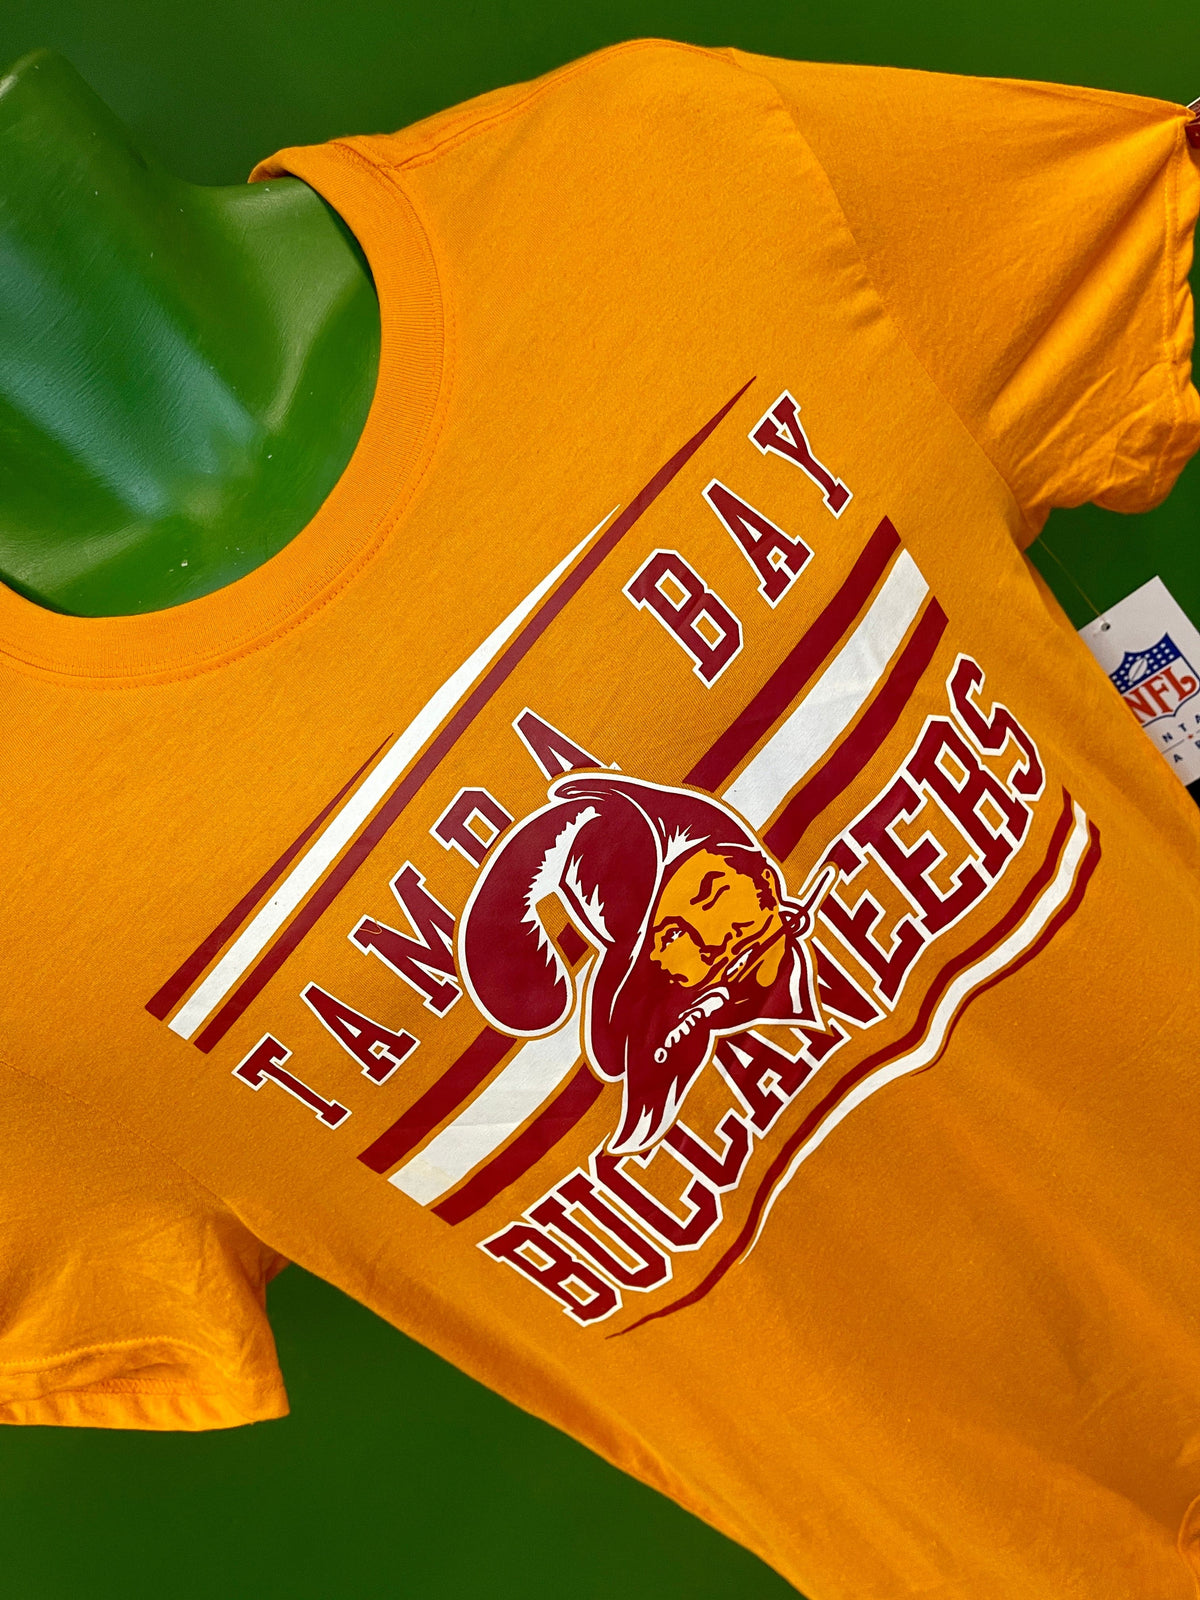 NFL Tampa Bay Buccaneers Vintage-Inspired T-Shirt Men's Medium NWT